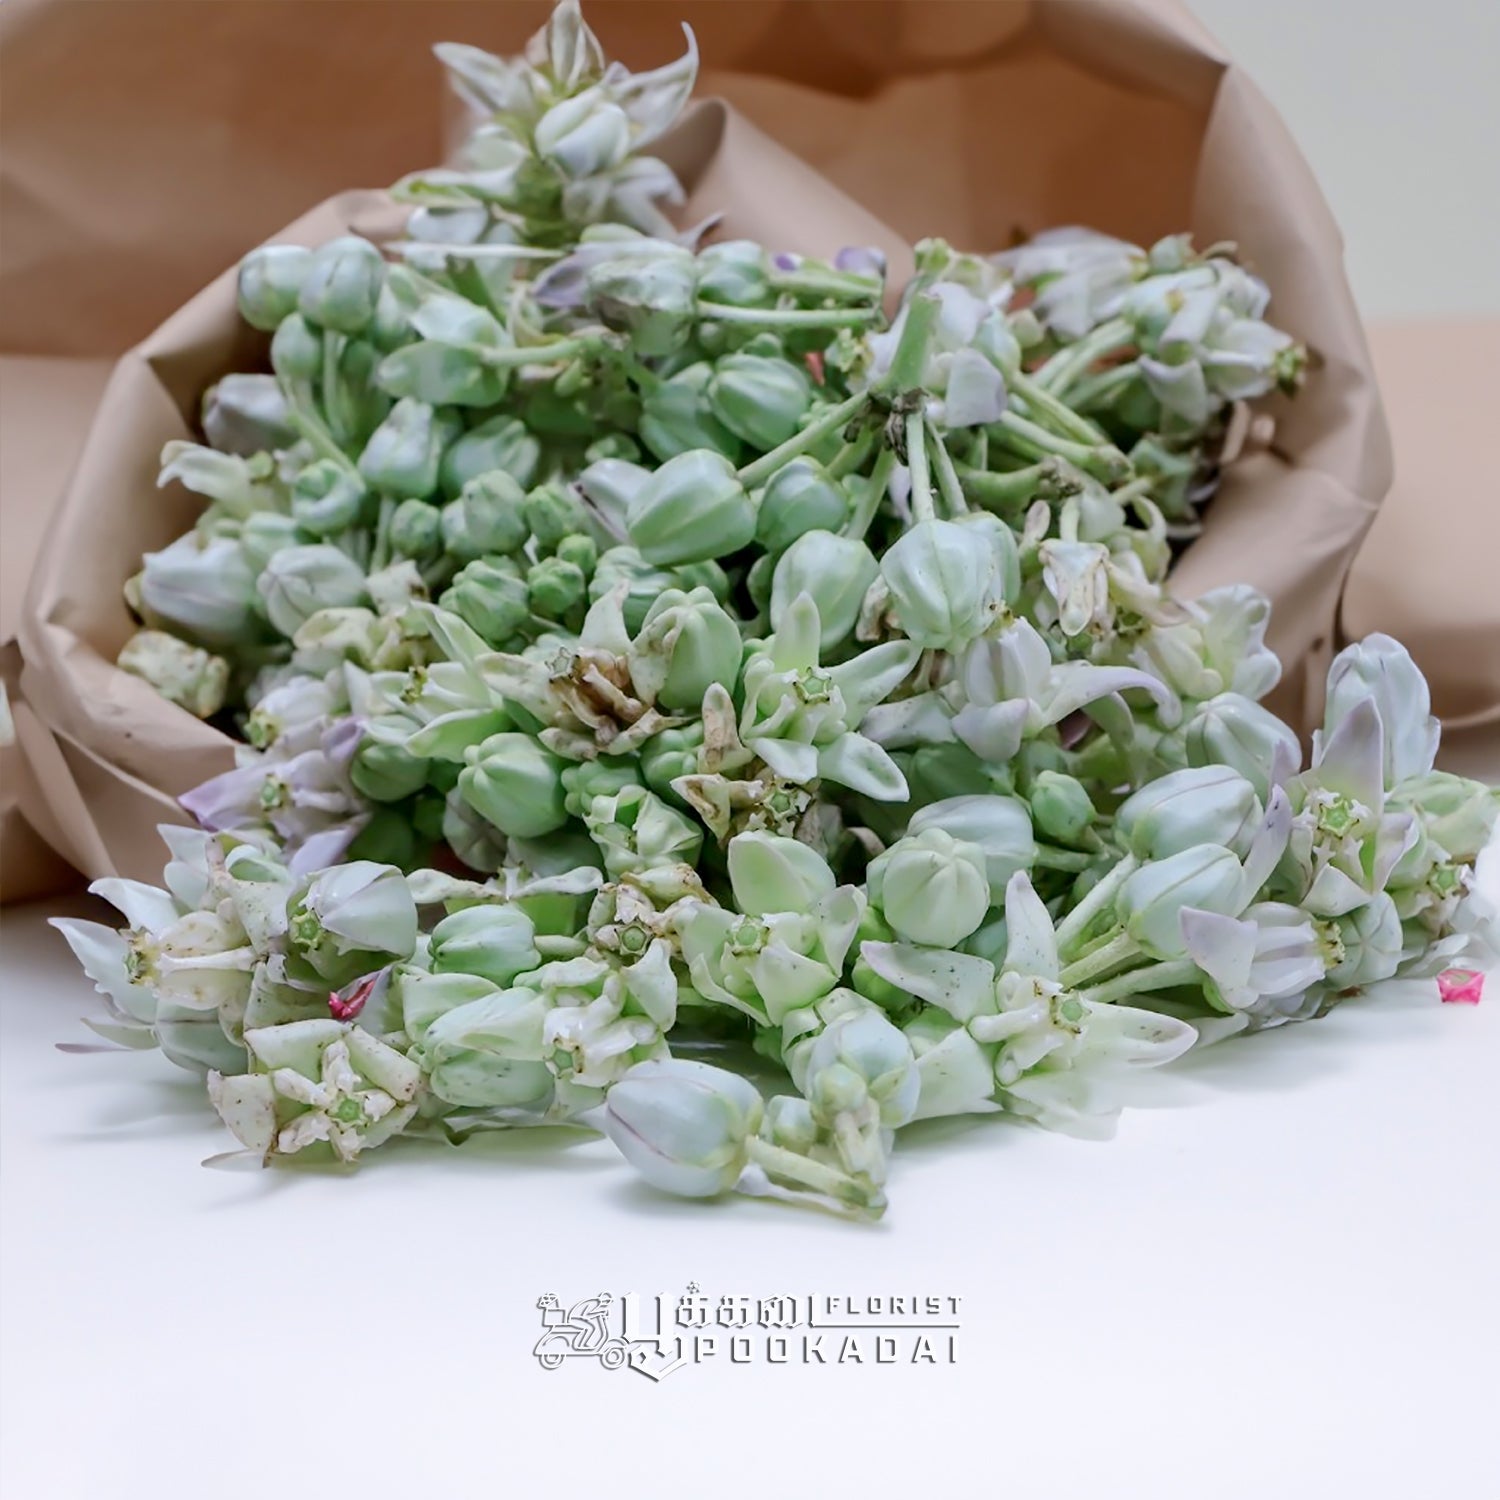 Erukkam Pushpam / Madar Flower - Pookadai Florist Toronto